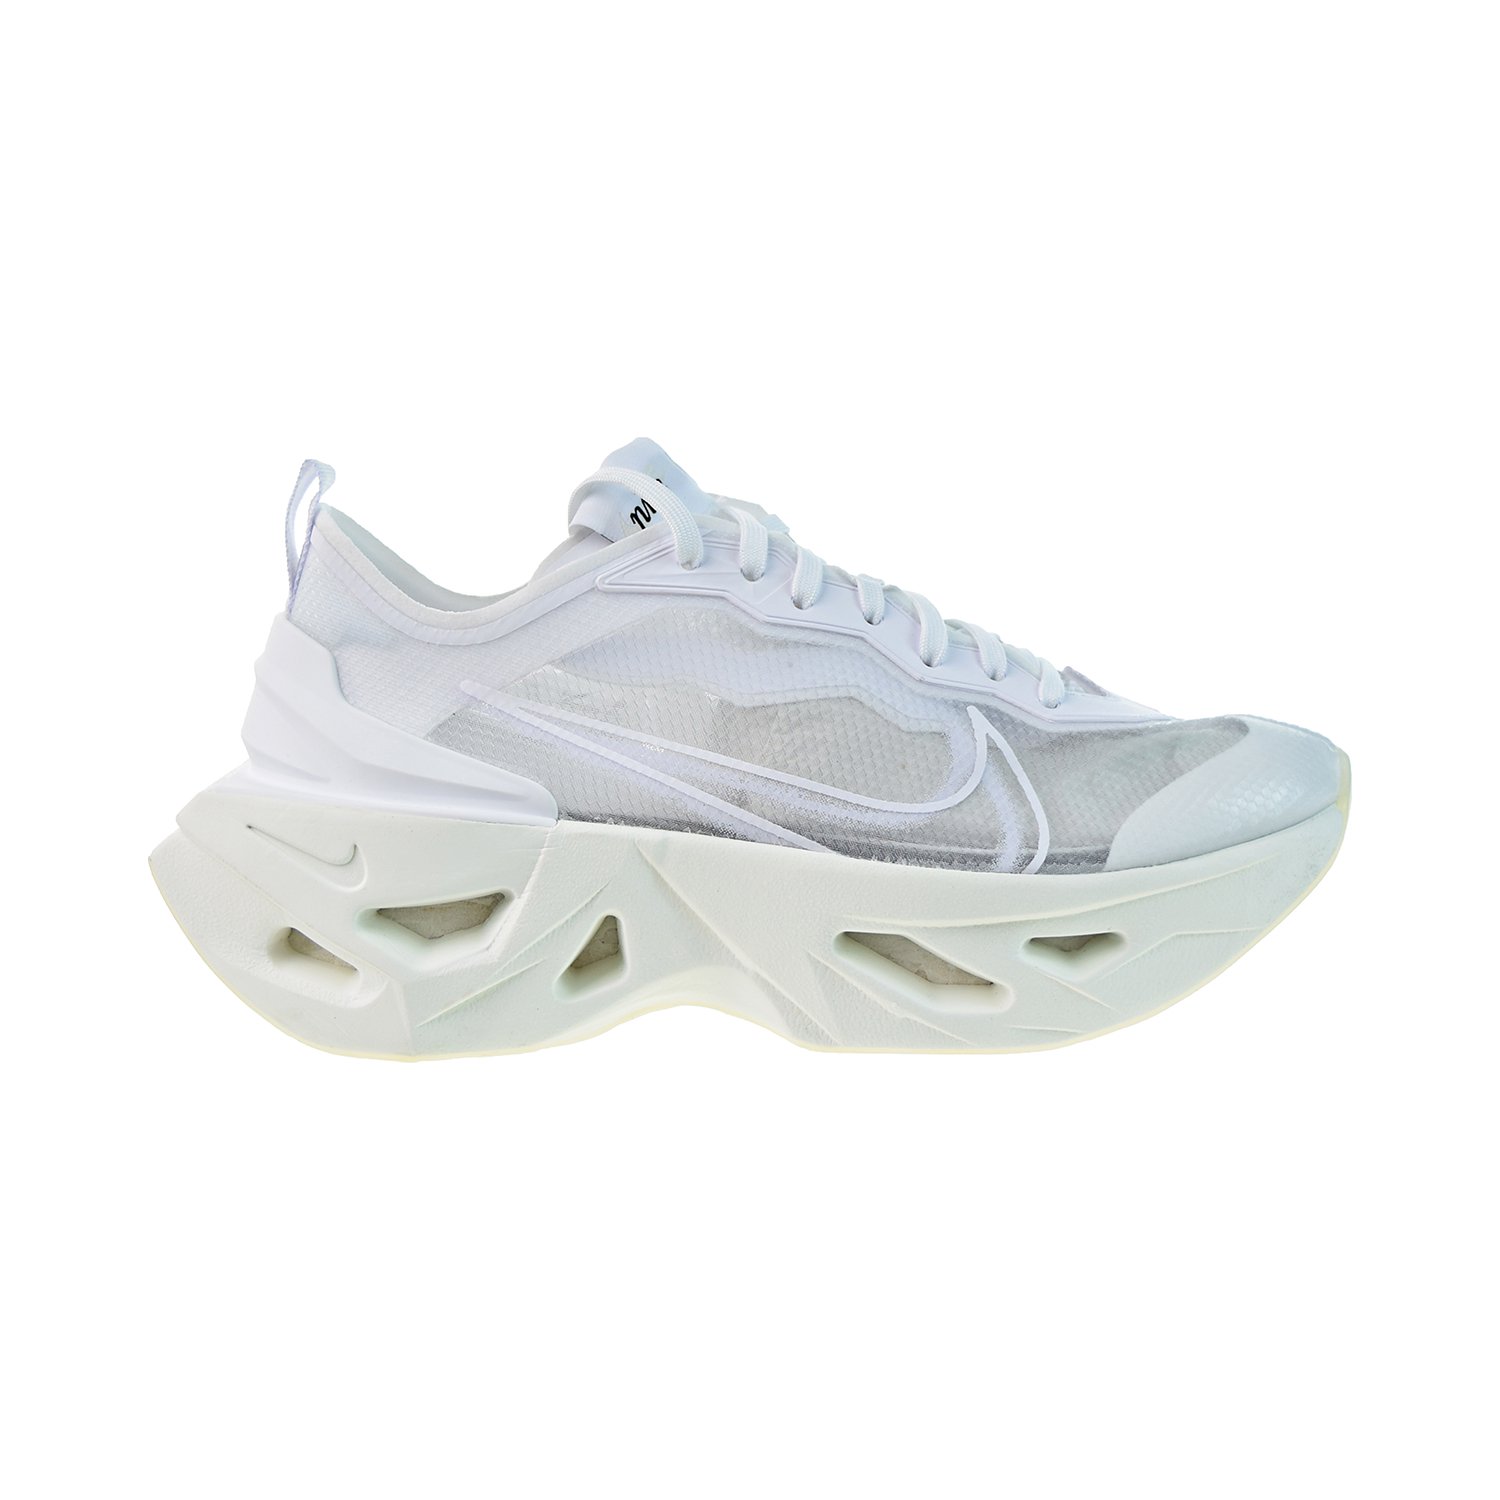 Nike Zoom X Vista Grind Women's Shoes White-Sail cq9500-101 - Walmart.com